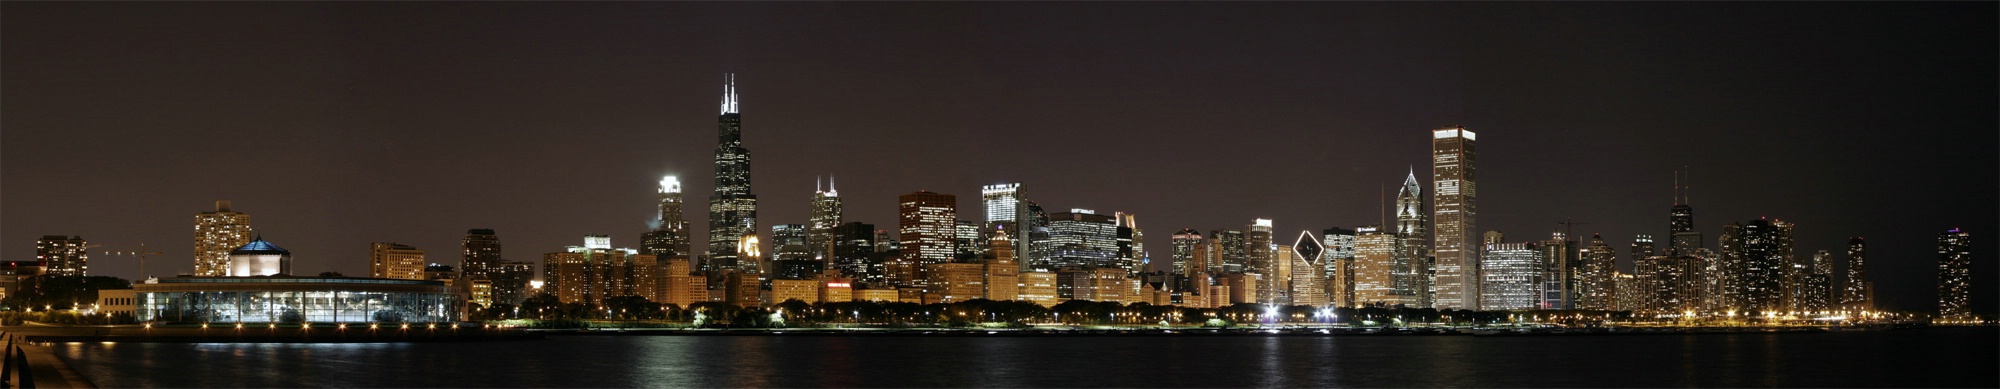 Evening Chicago Cityscape